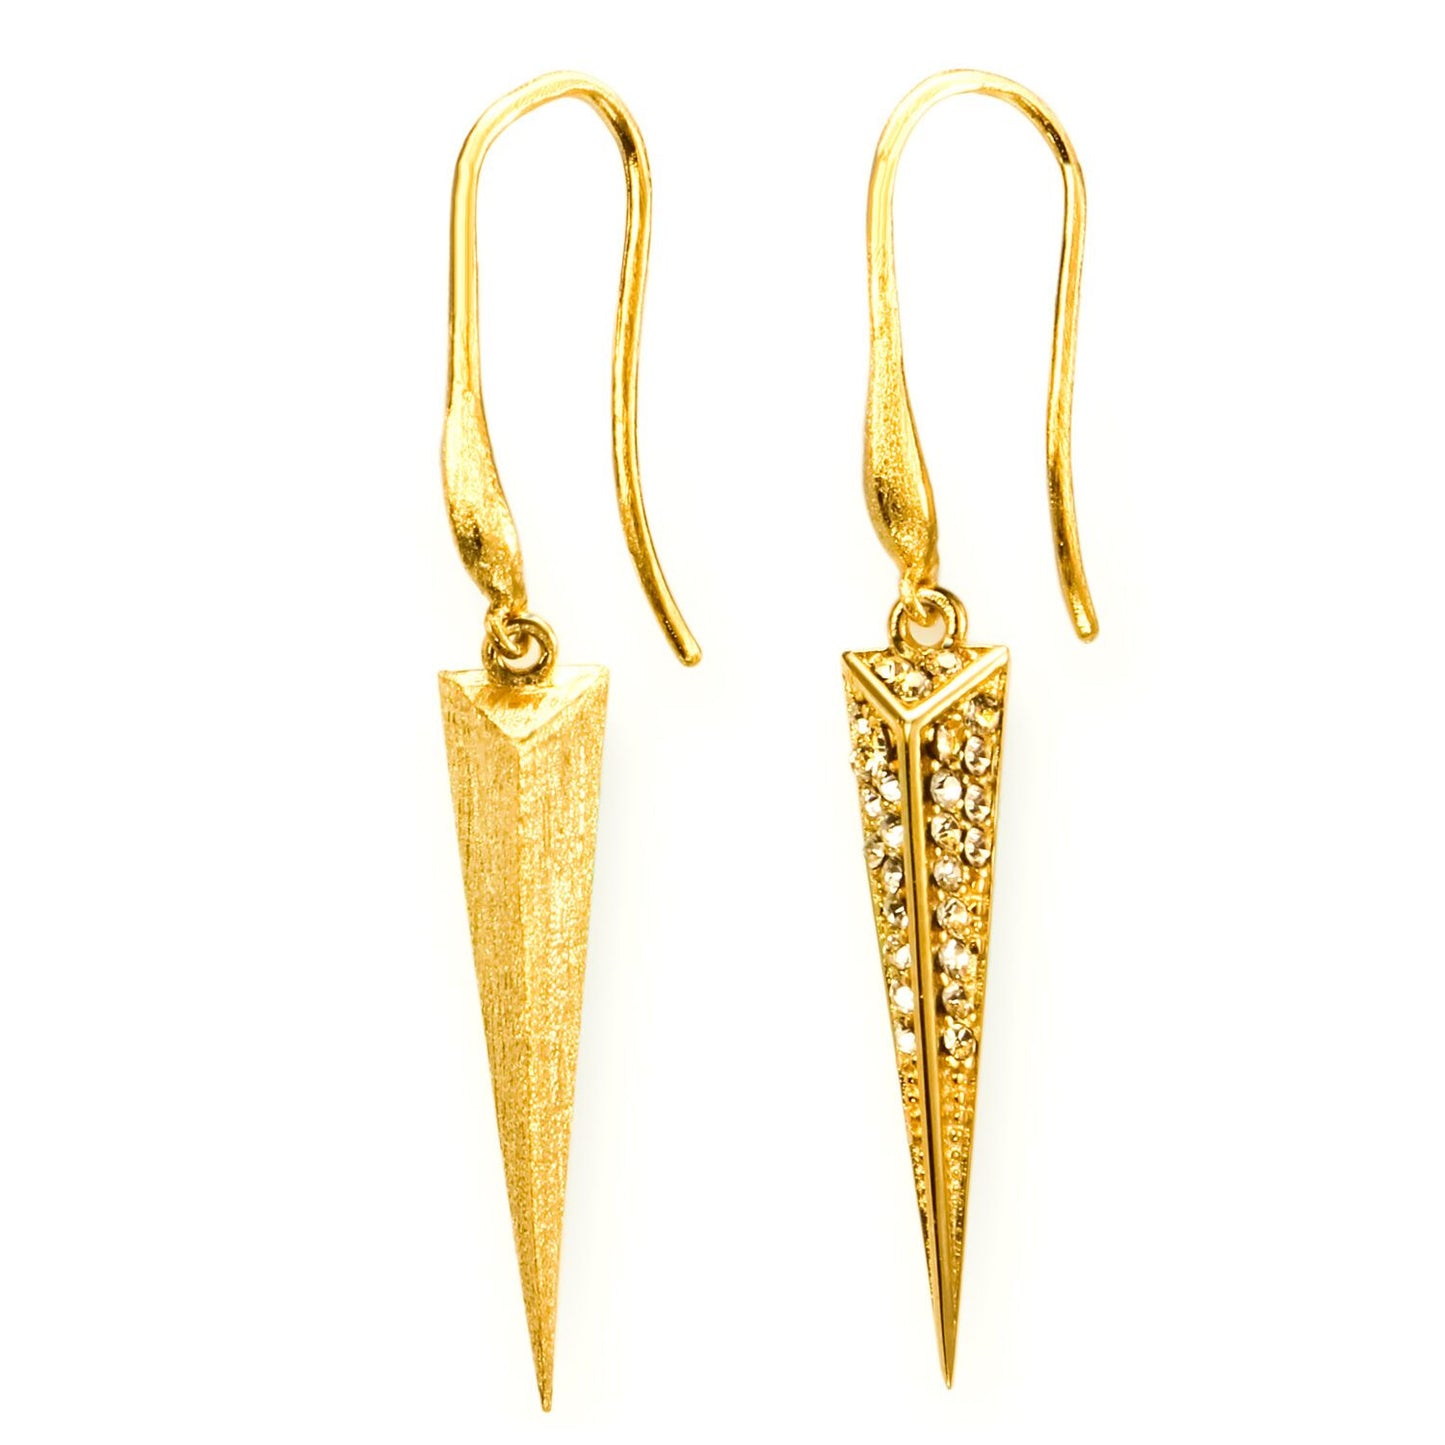 Mantra Dagger Drop Earrings, gold, Swarovski crystals